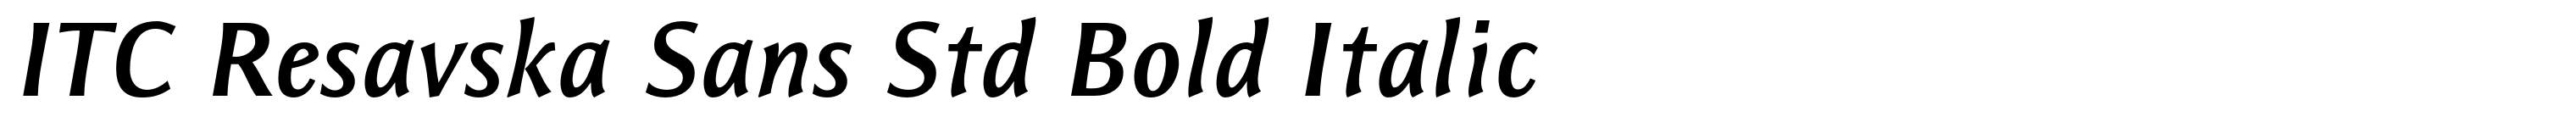 ITC Resavska Sans Std Bold Italic